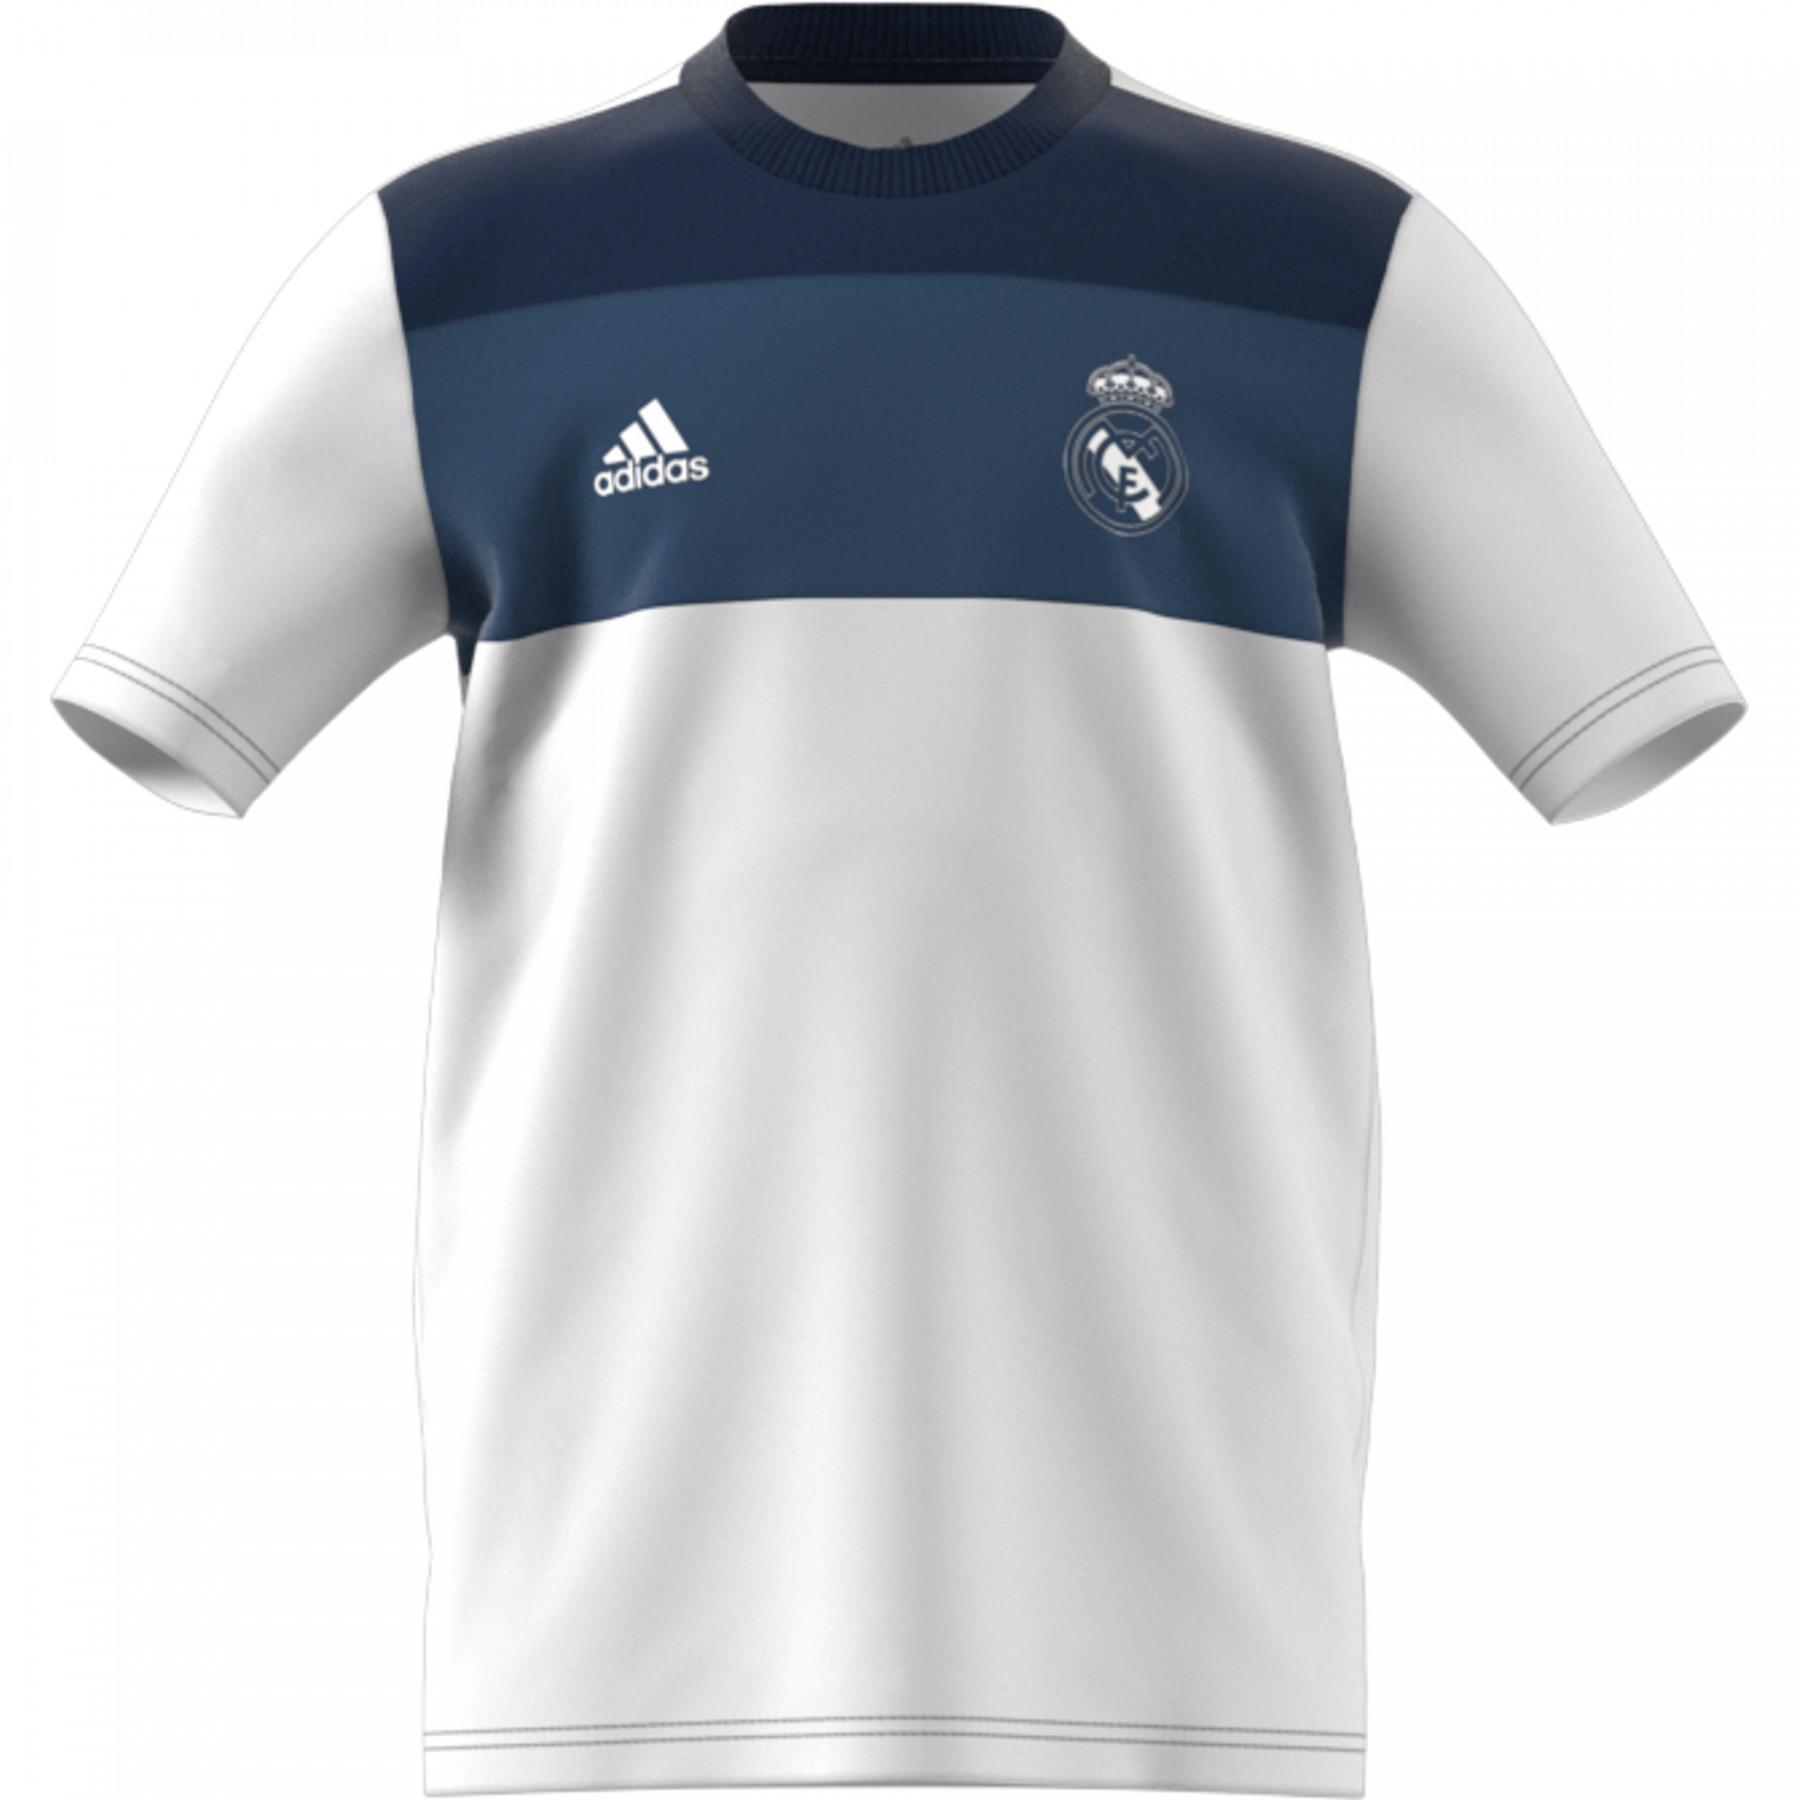 Kinder-T-Shirt Real Madrid